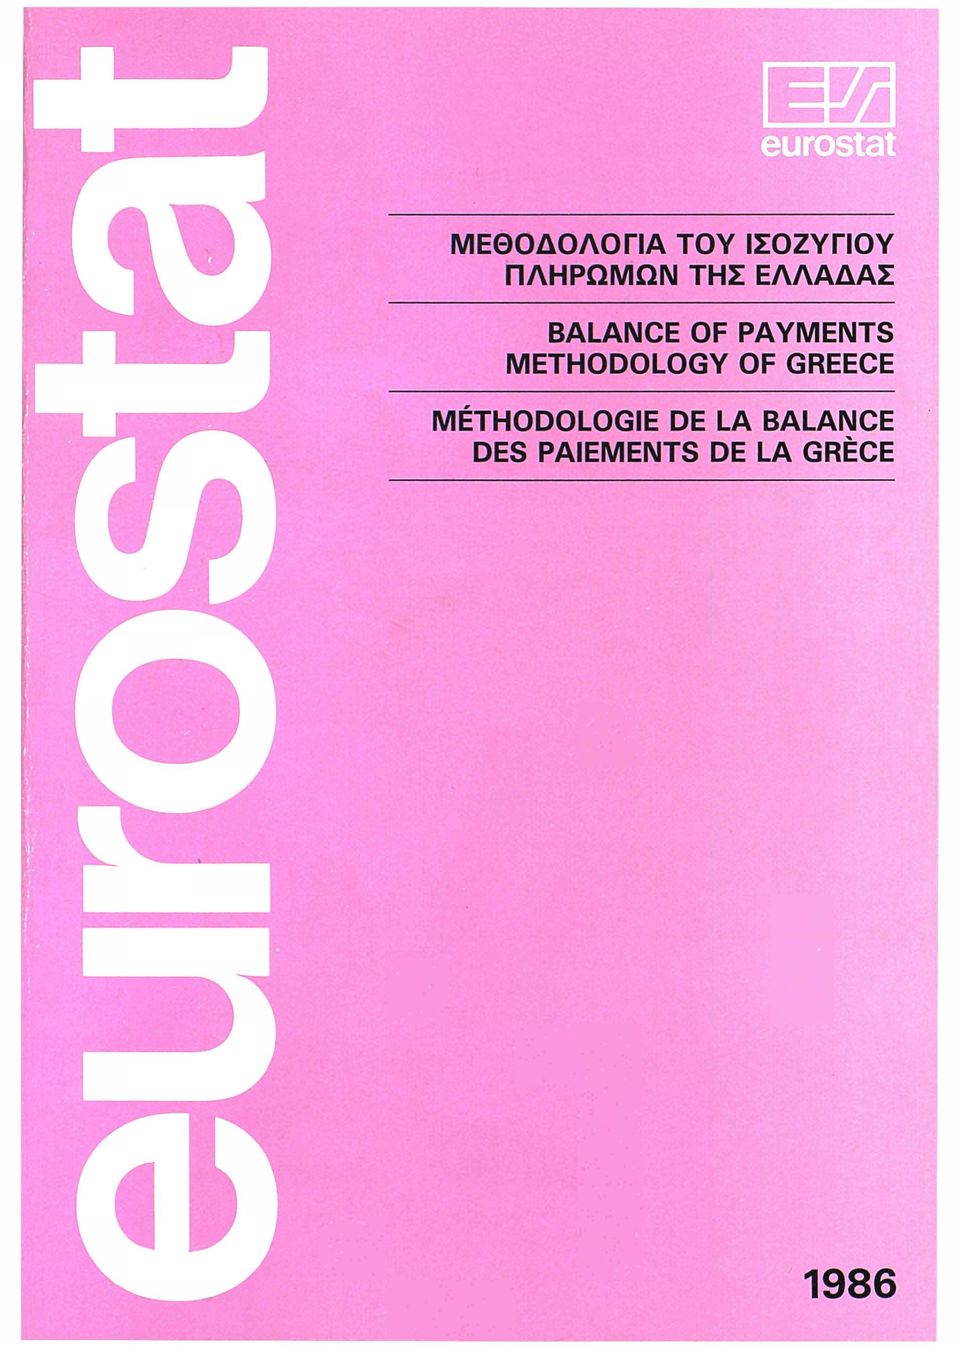 METHODOLOGY OF GREECE METHODOLOGIE